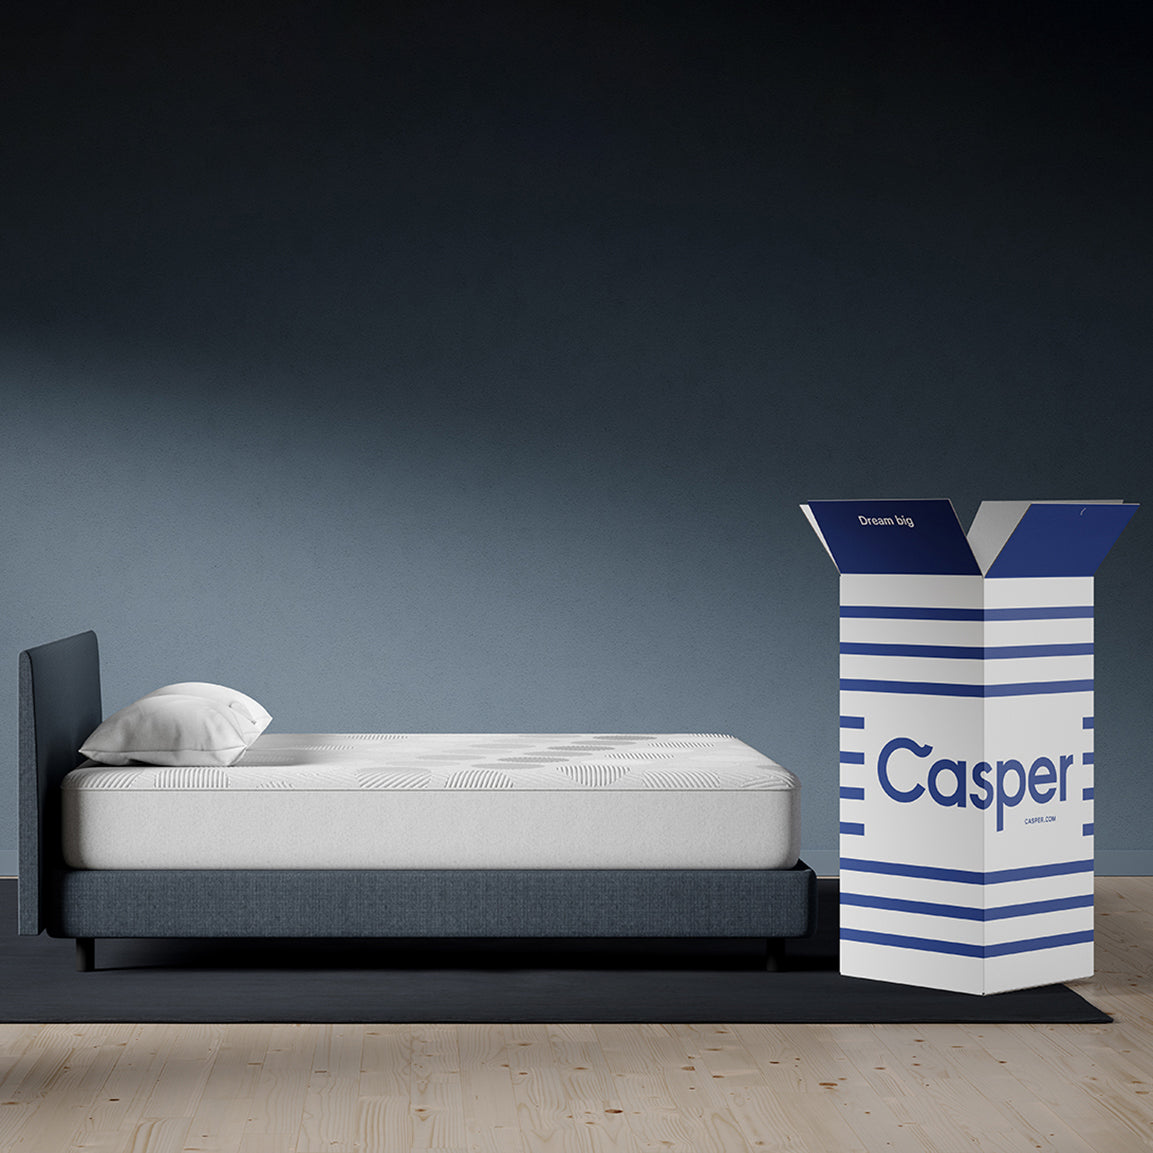 Casper Original Hybrid Mattress On Bed In Bedroom With Box Packaging